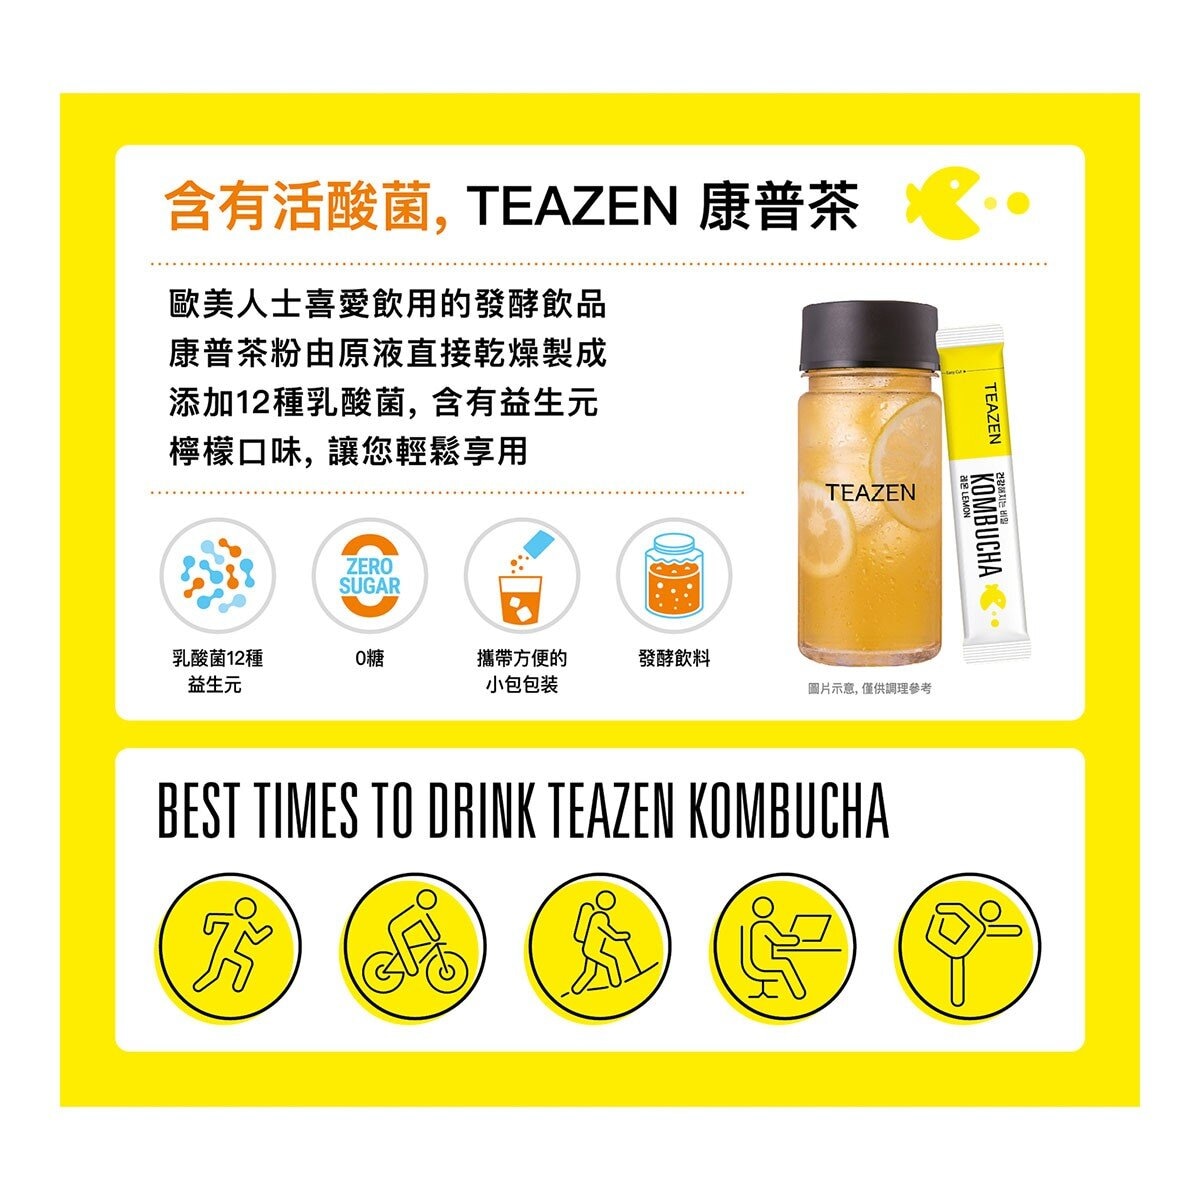 TEAZEN 康普茶 檸檬口味 5公克 X 40包